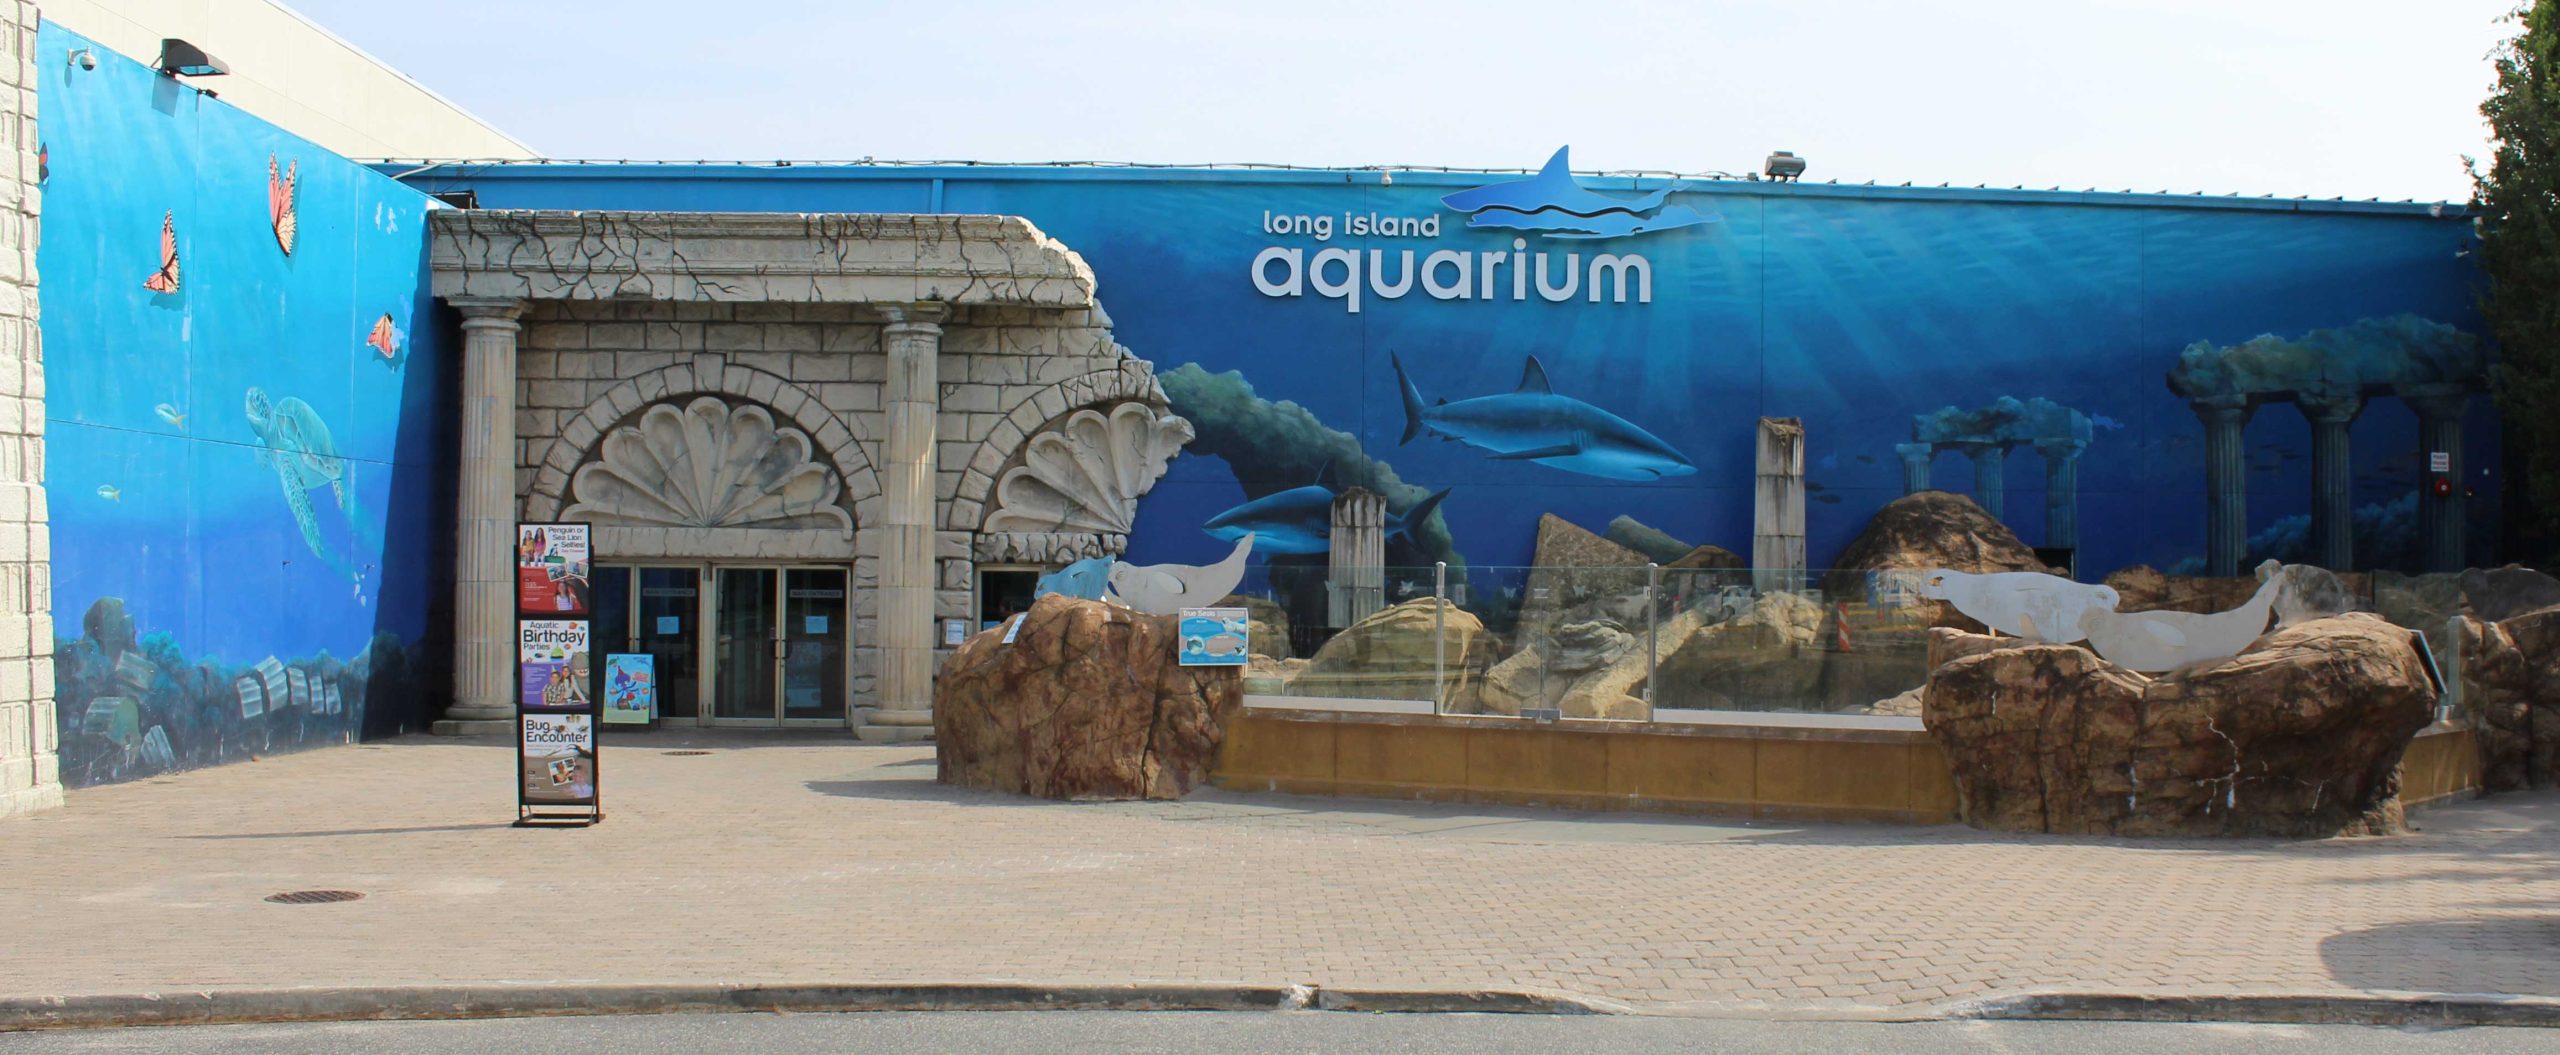 Long Island Aquarium Building